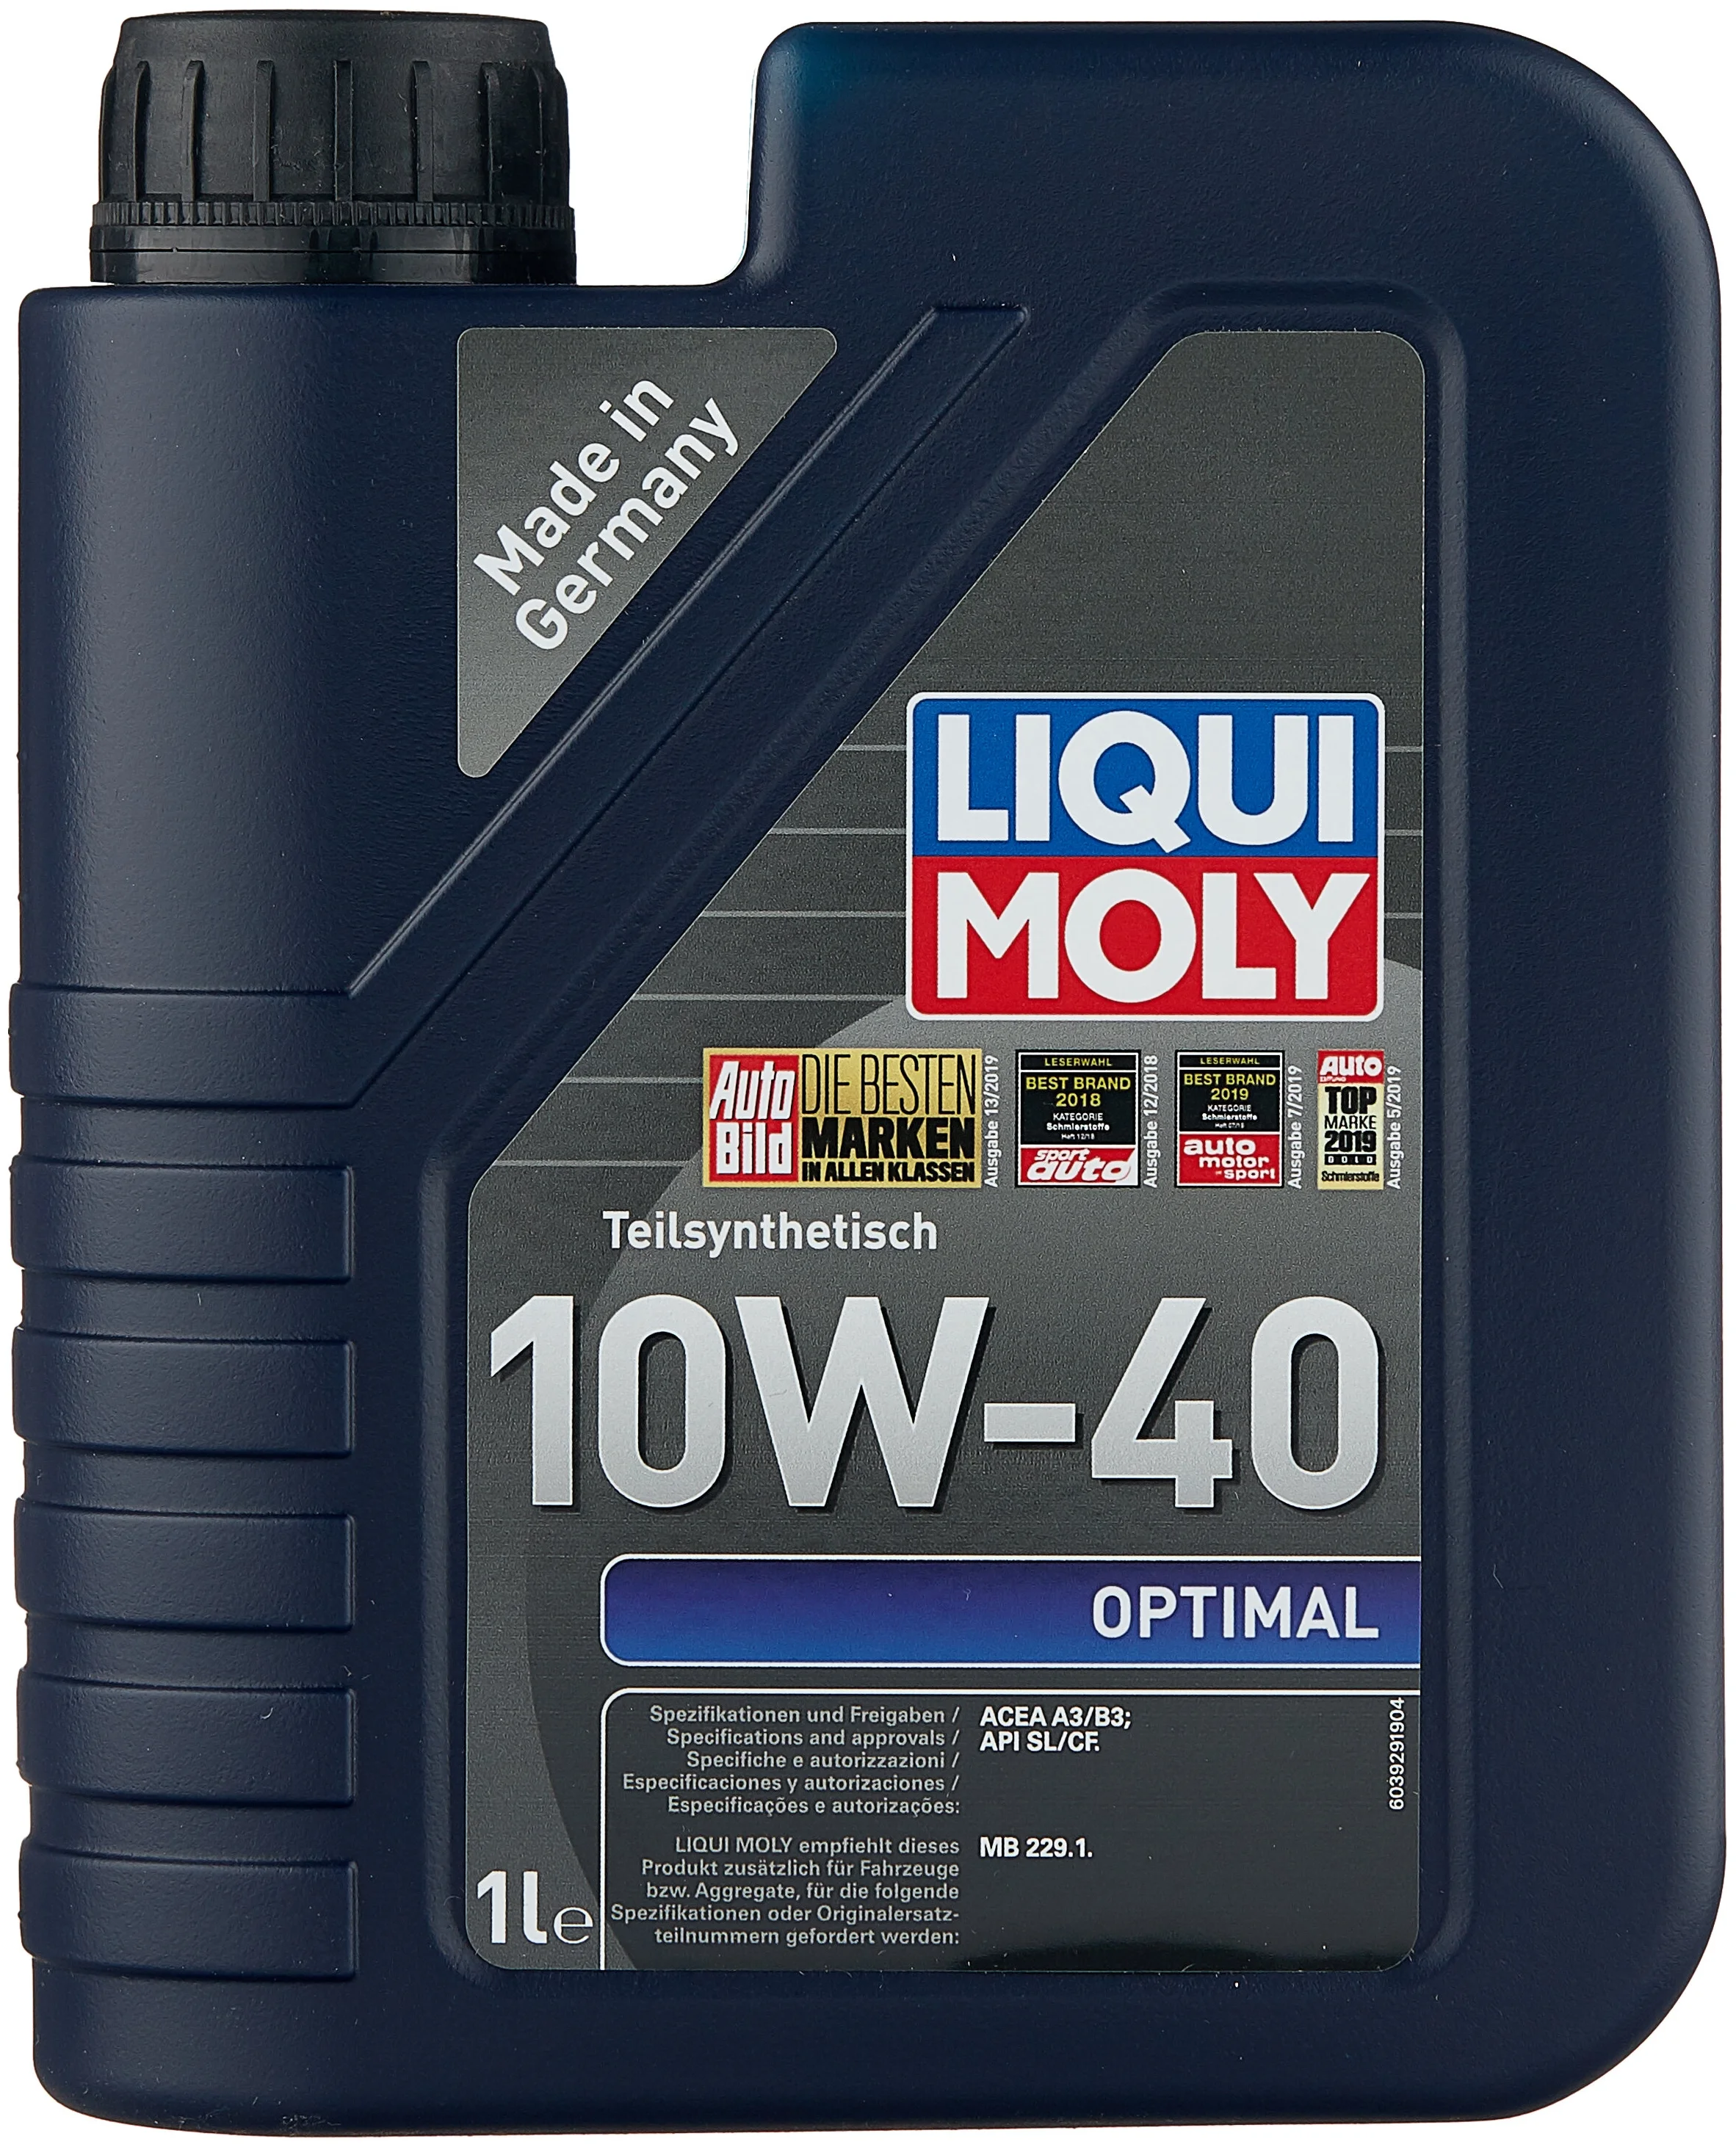 LIQUI MOLY Optimal 10W-40 - класс вязкости: 10W-40